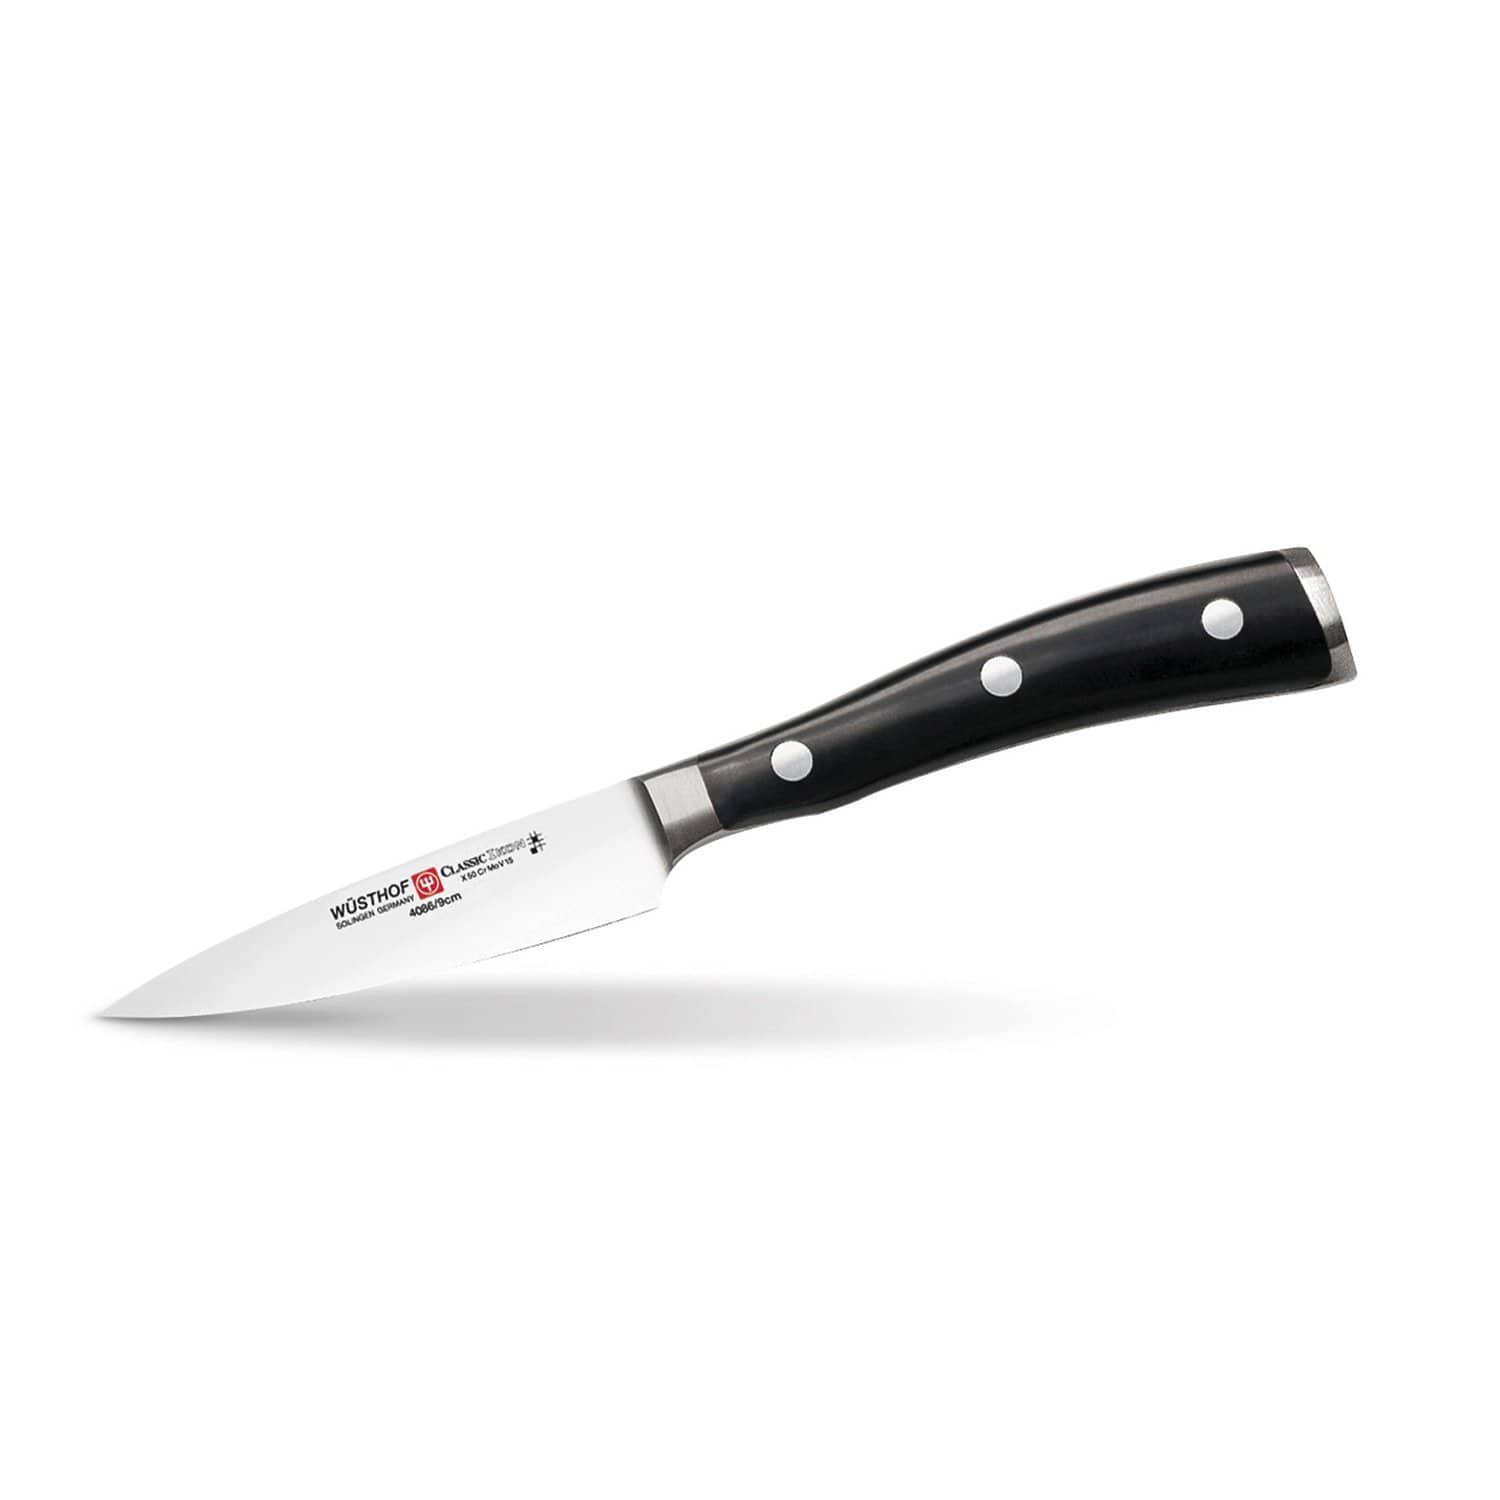 Wusthof كلاسيك ايكون بارينج سكين - الأسود والفضي، 3.5 بوصة - 798612 - Jashanmal الرئيسية